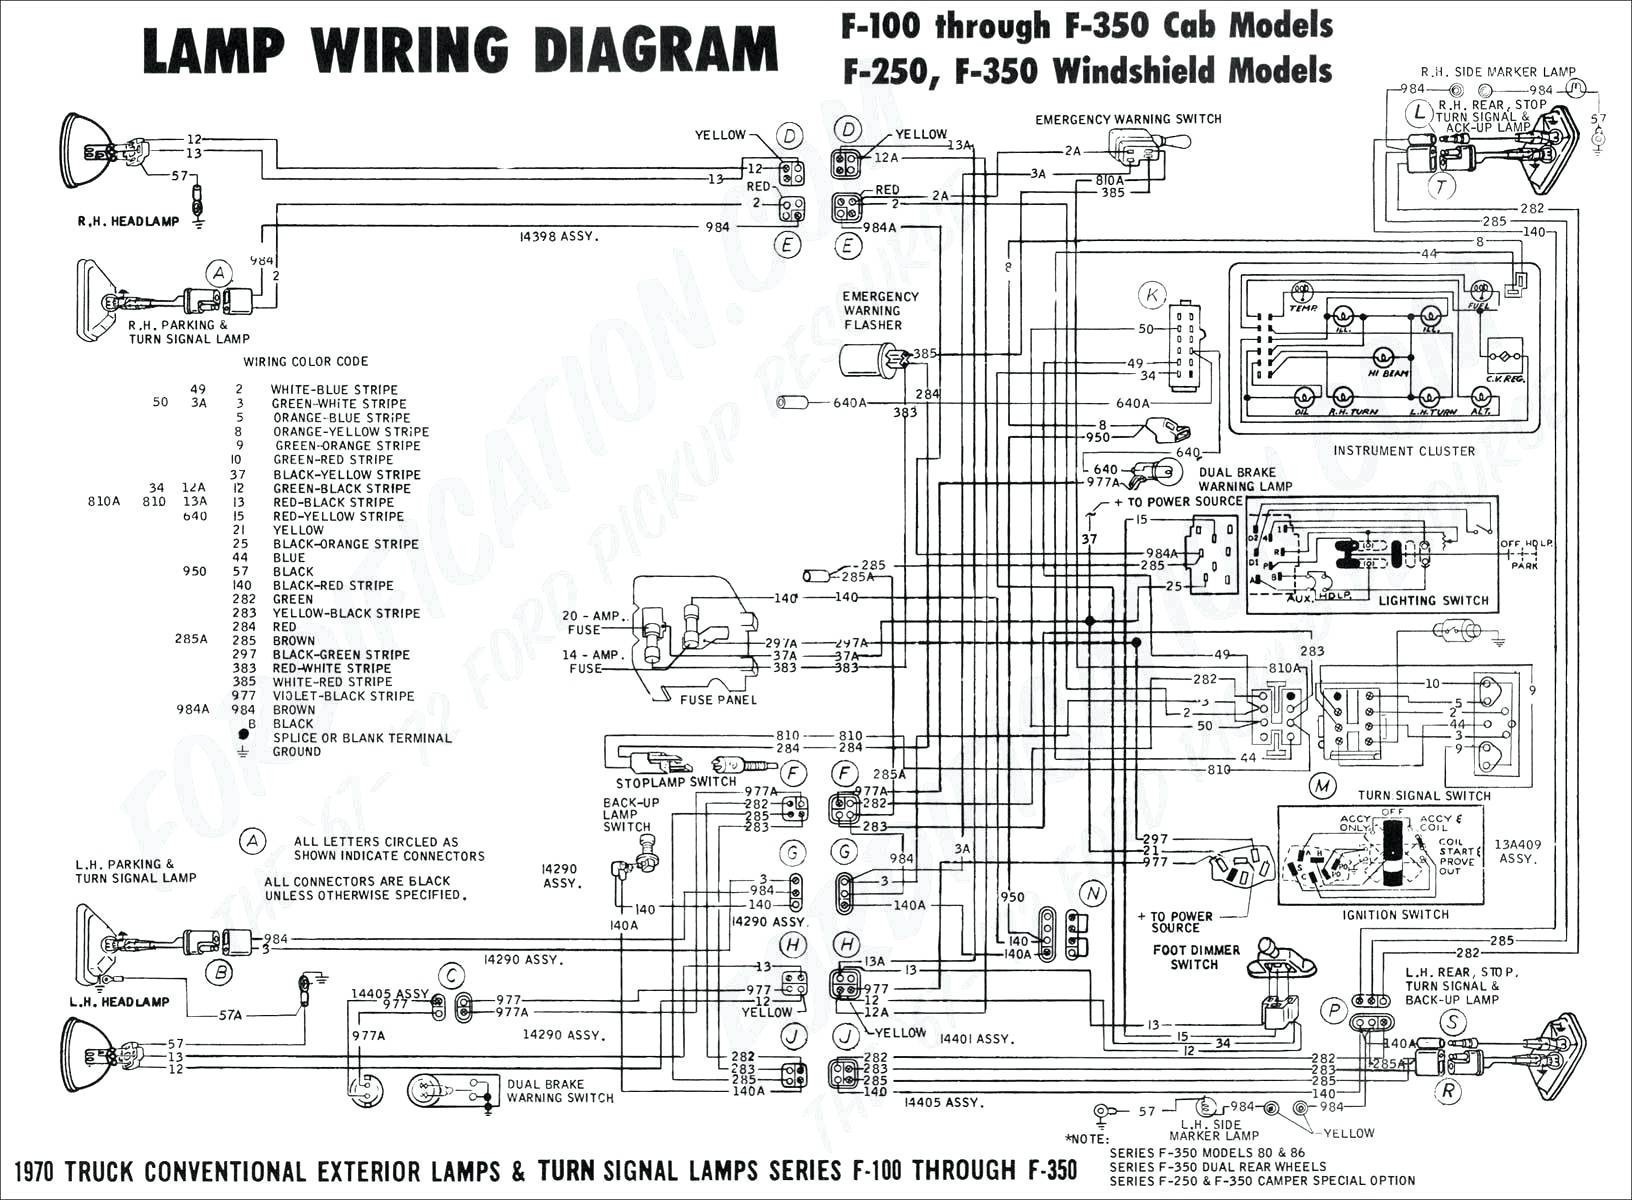 Wiring Diagram for Nippondenso Alternator 2018 Mercedes Alternator Wiring Diagram Save Bmw Alternator Wiring